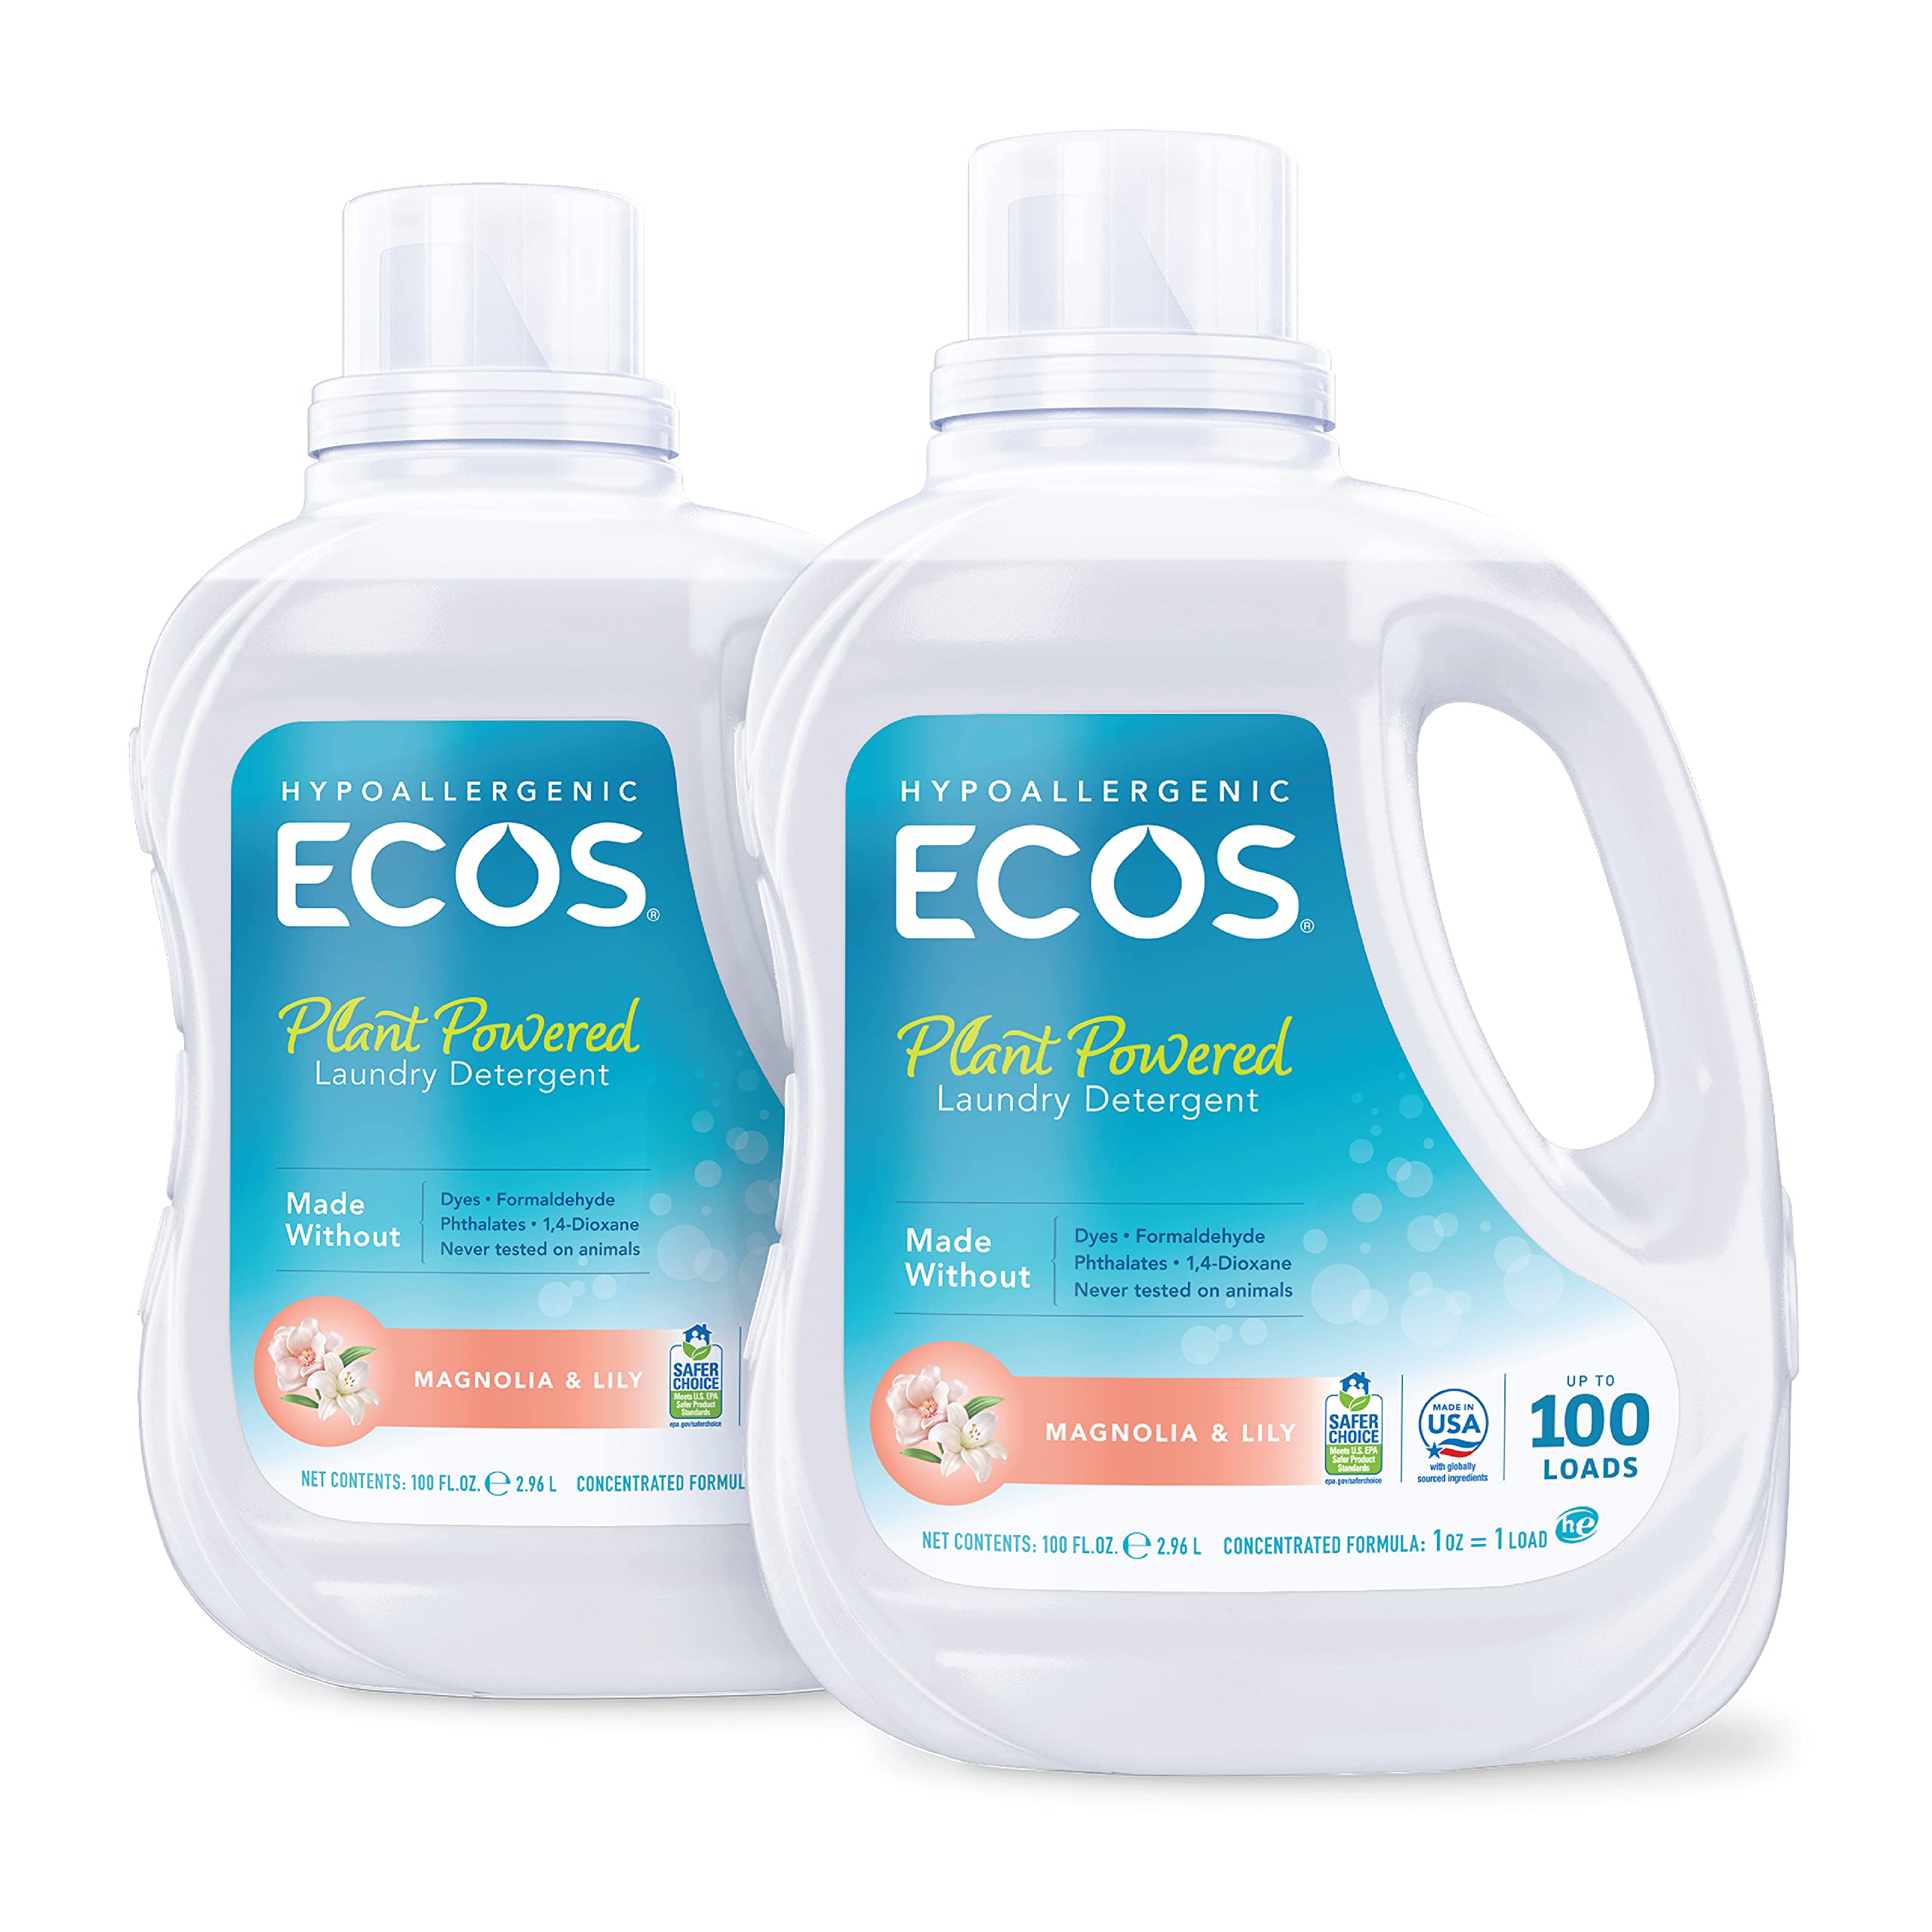 Is Ecos Laundry Detergent Good?